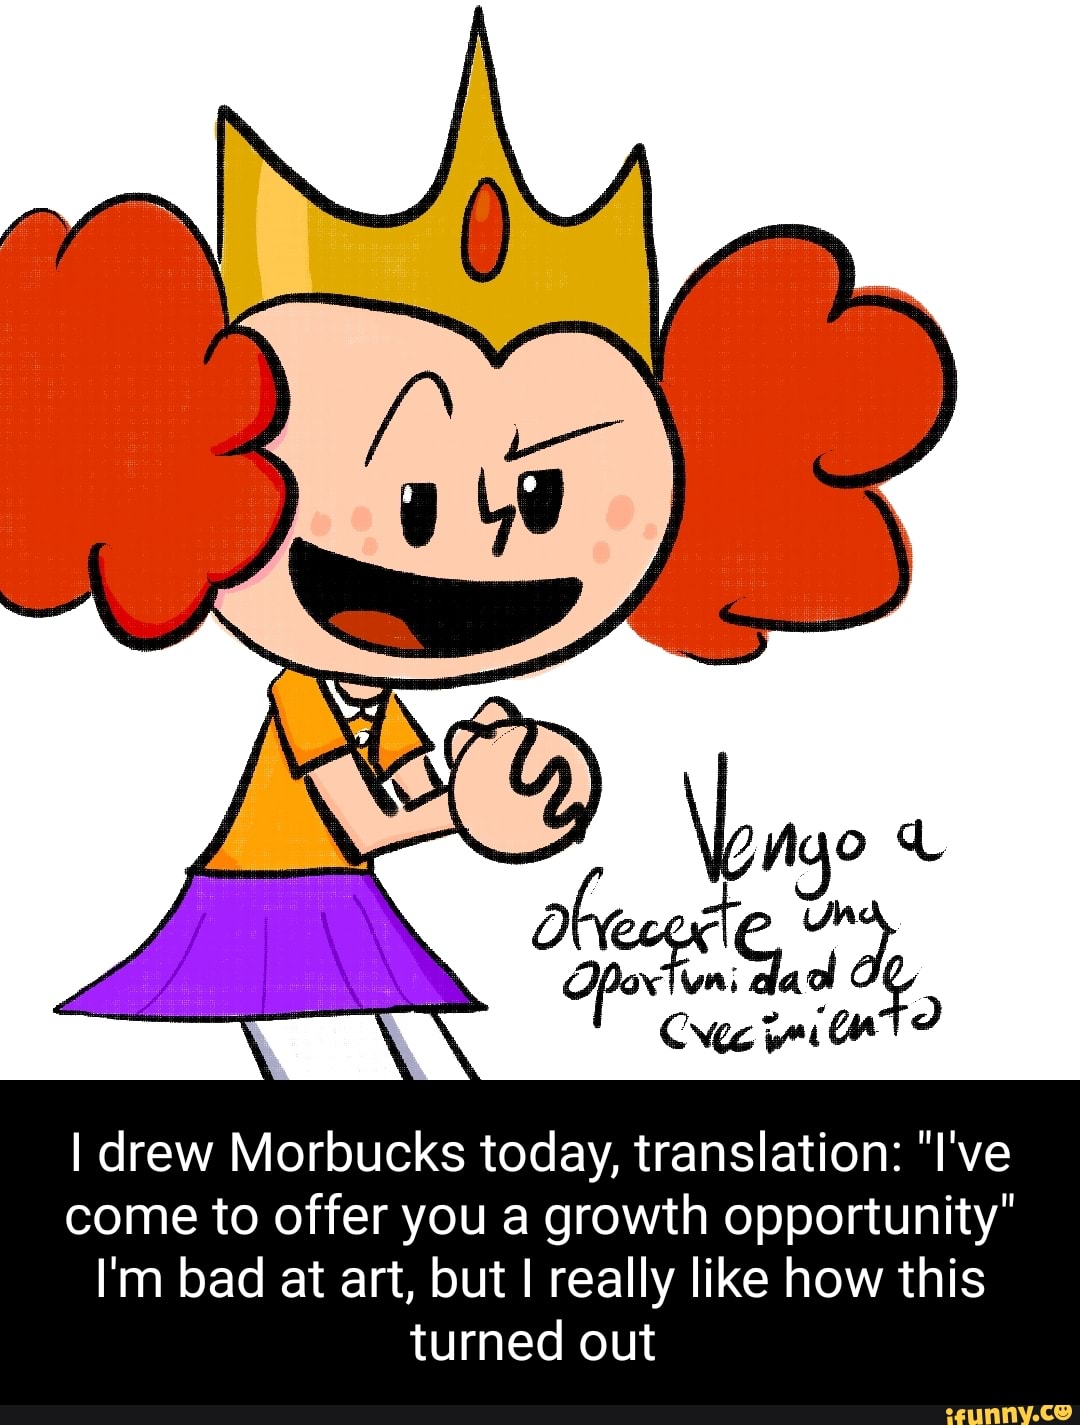 powerpuff girls princess morbucks episode